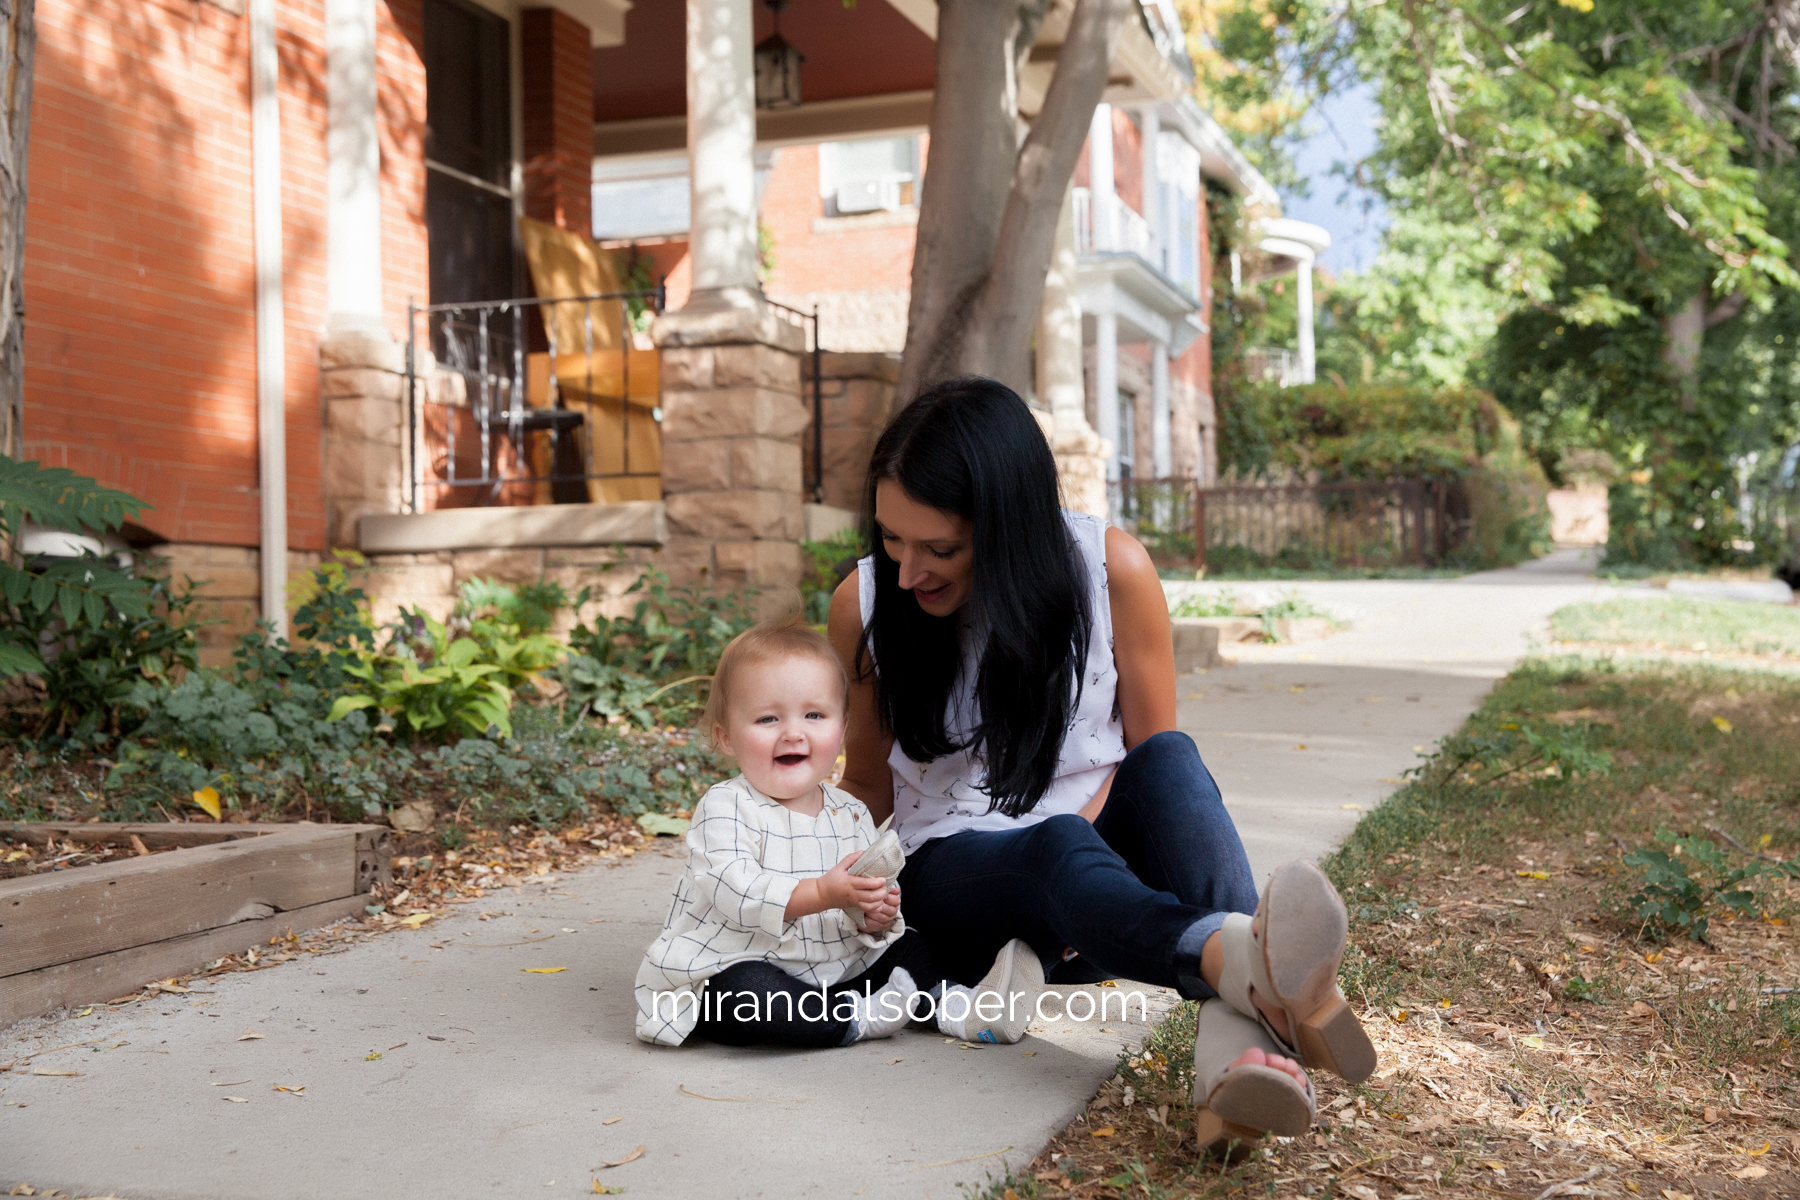 Colorado Baby Photographers, Miranda L. Sober Photography